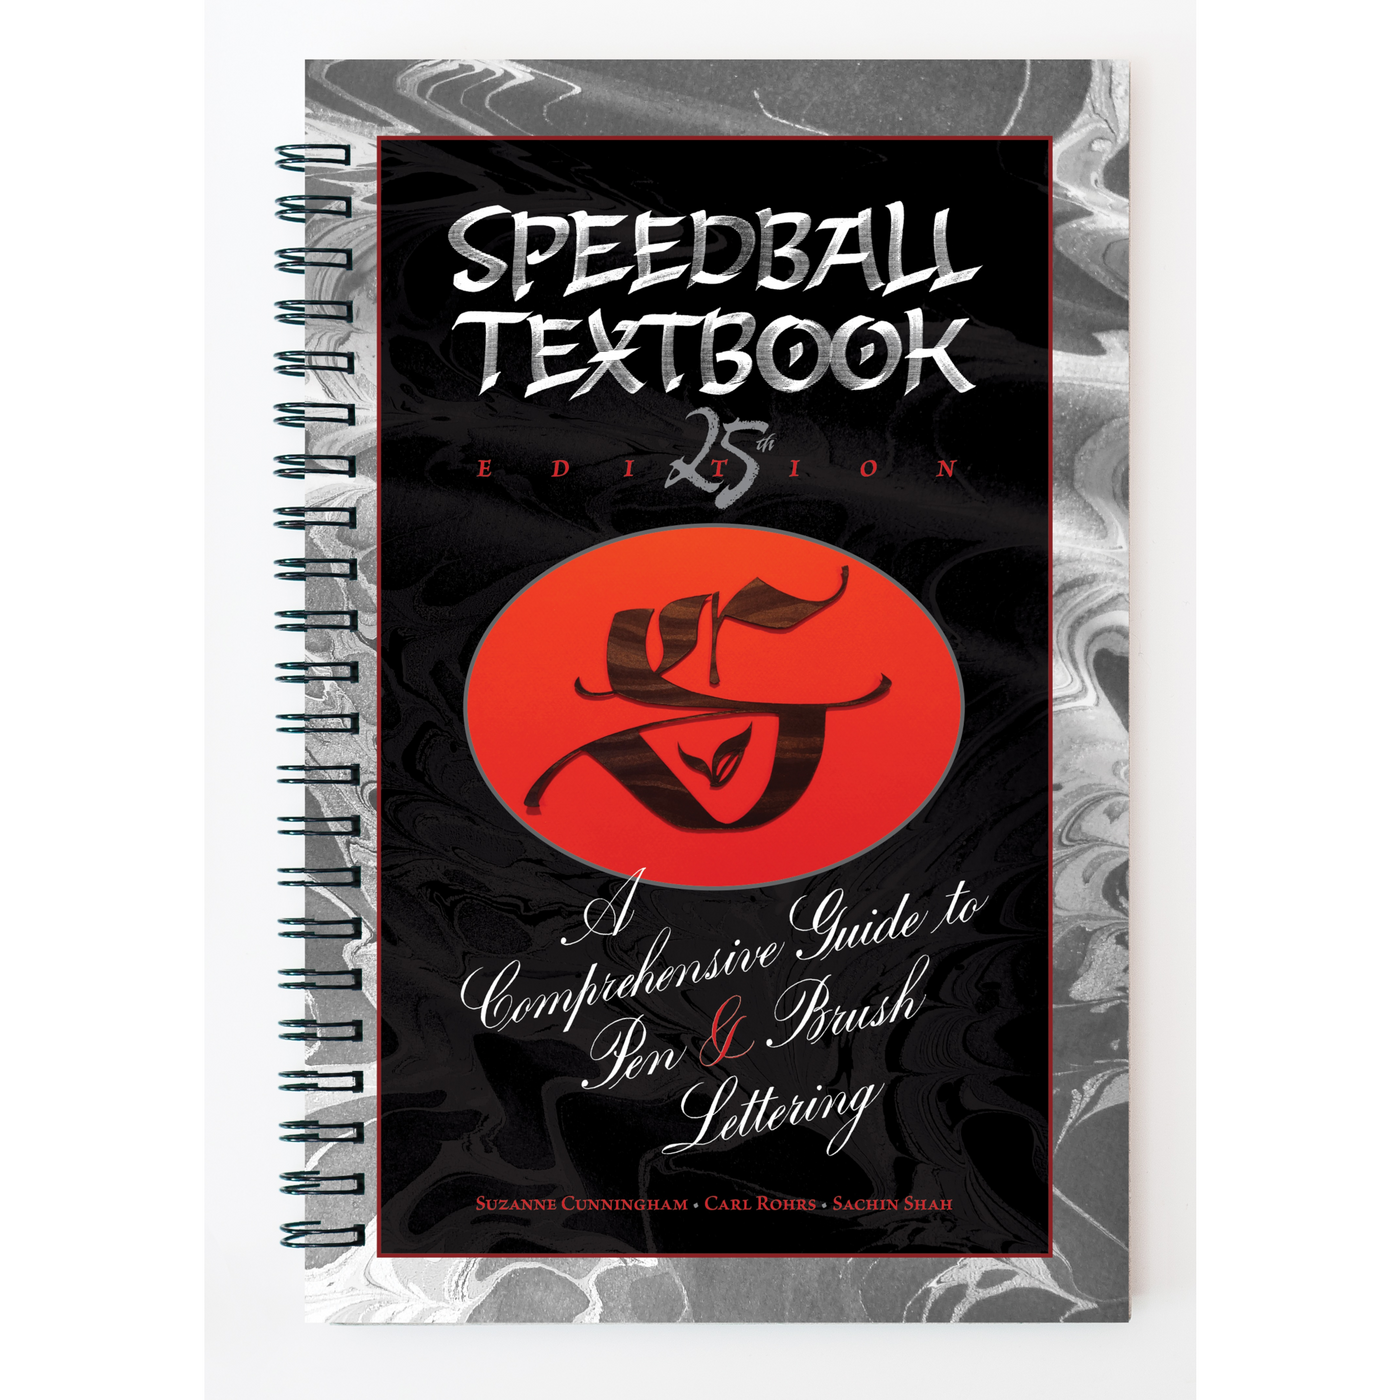 Speedball The Speedball Textbook (25th Edition)